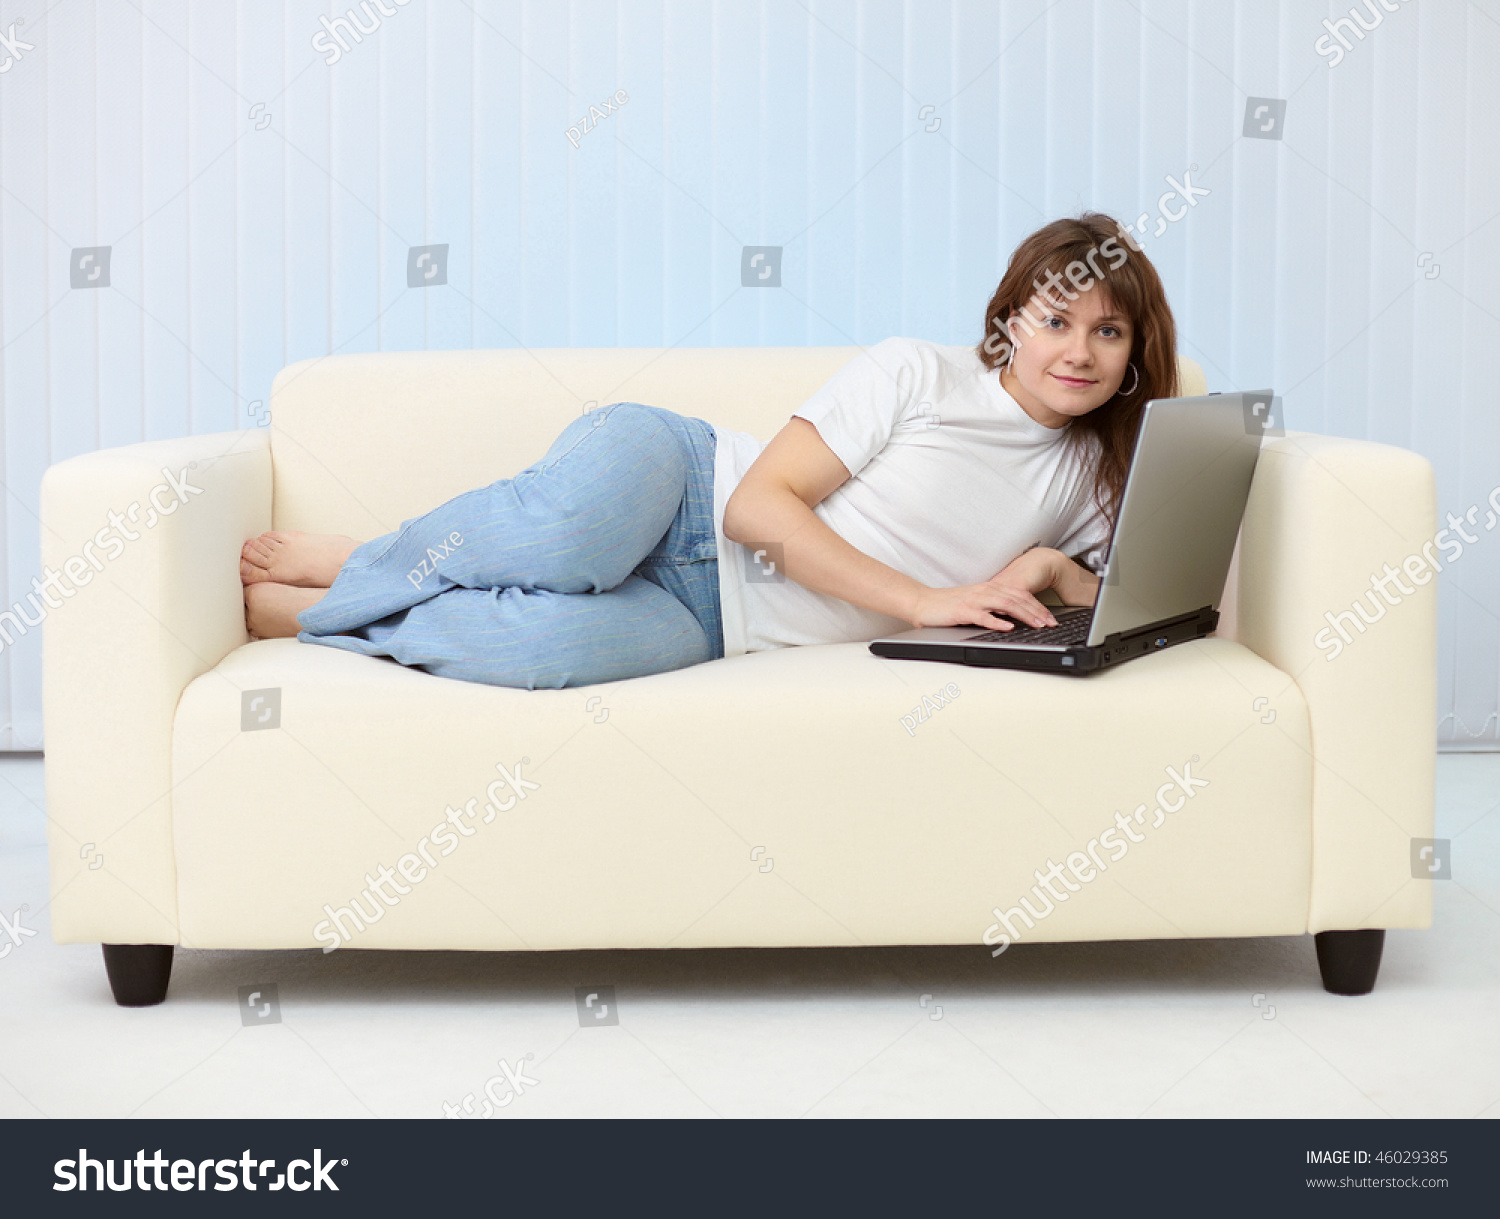 Девушка лежит на диване с ноутбуком